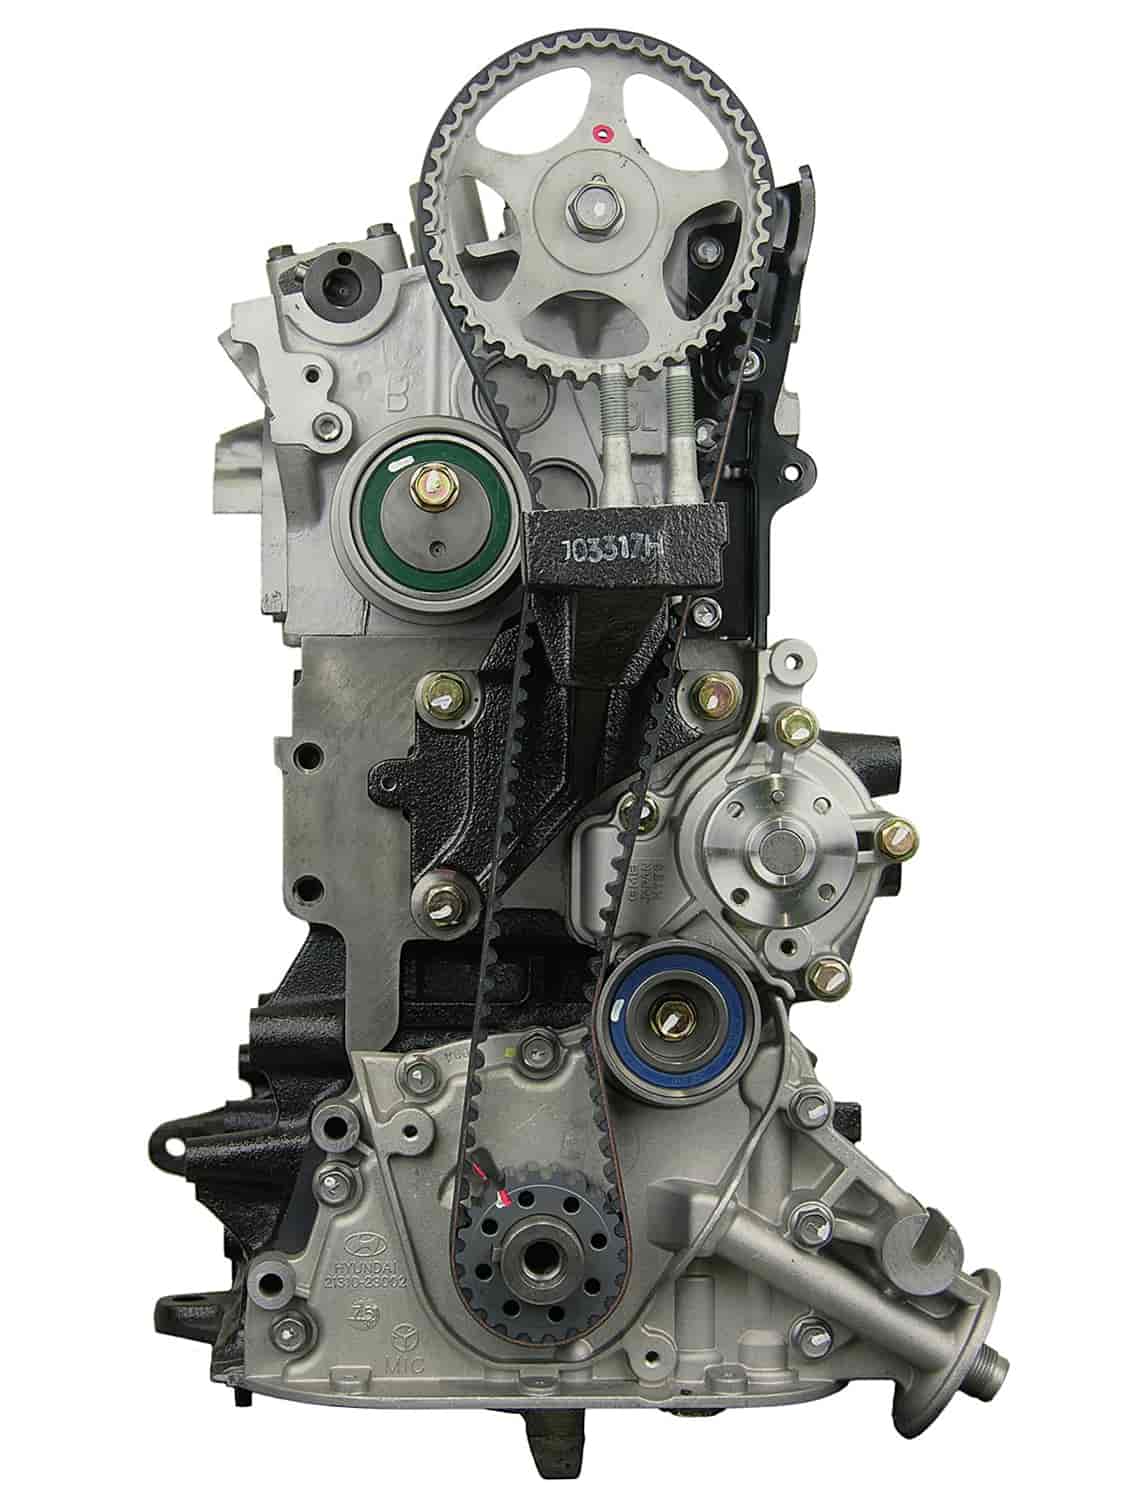 Remanufactured Crate Engine for 1999-2001 Hyundai Elantra & Tiburon with 2.0L L4